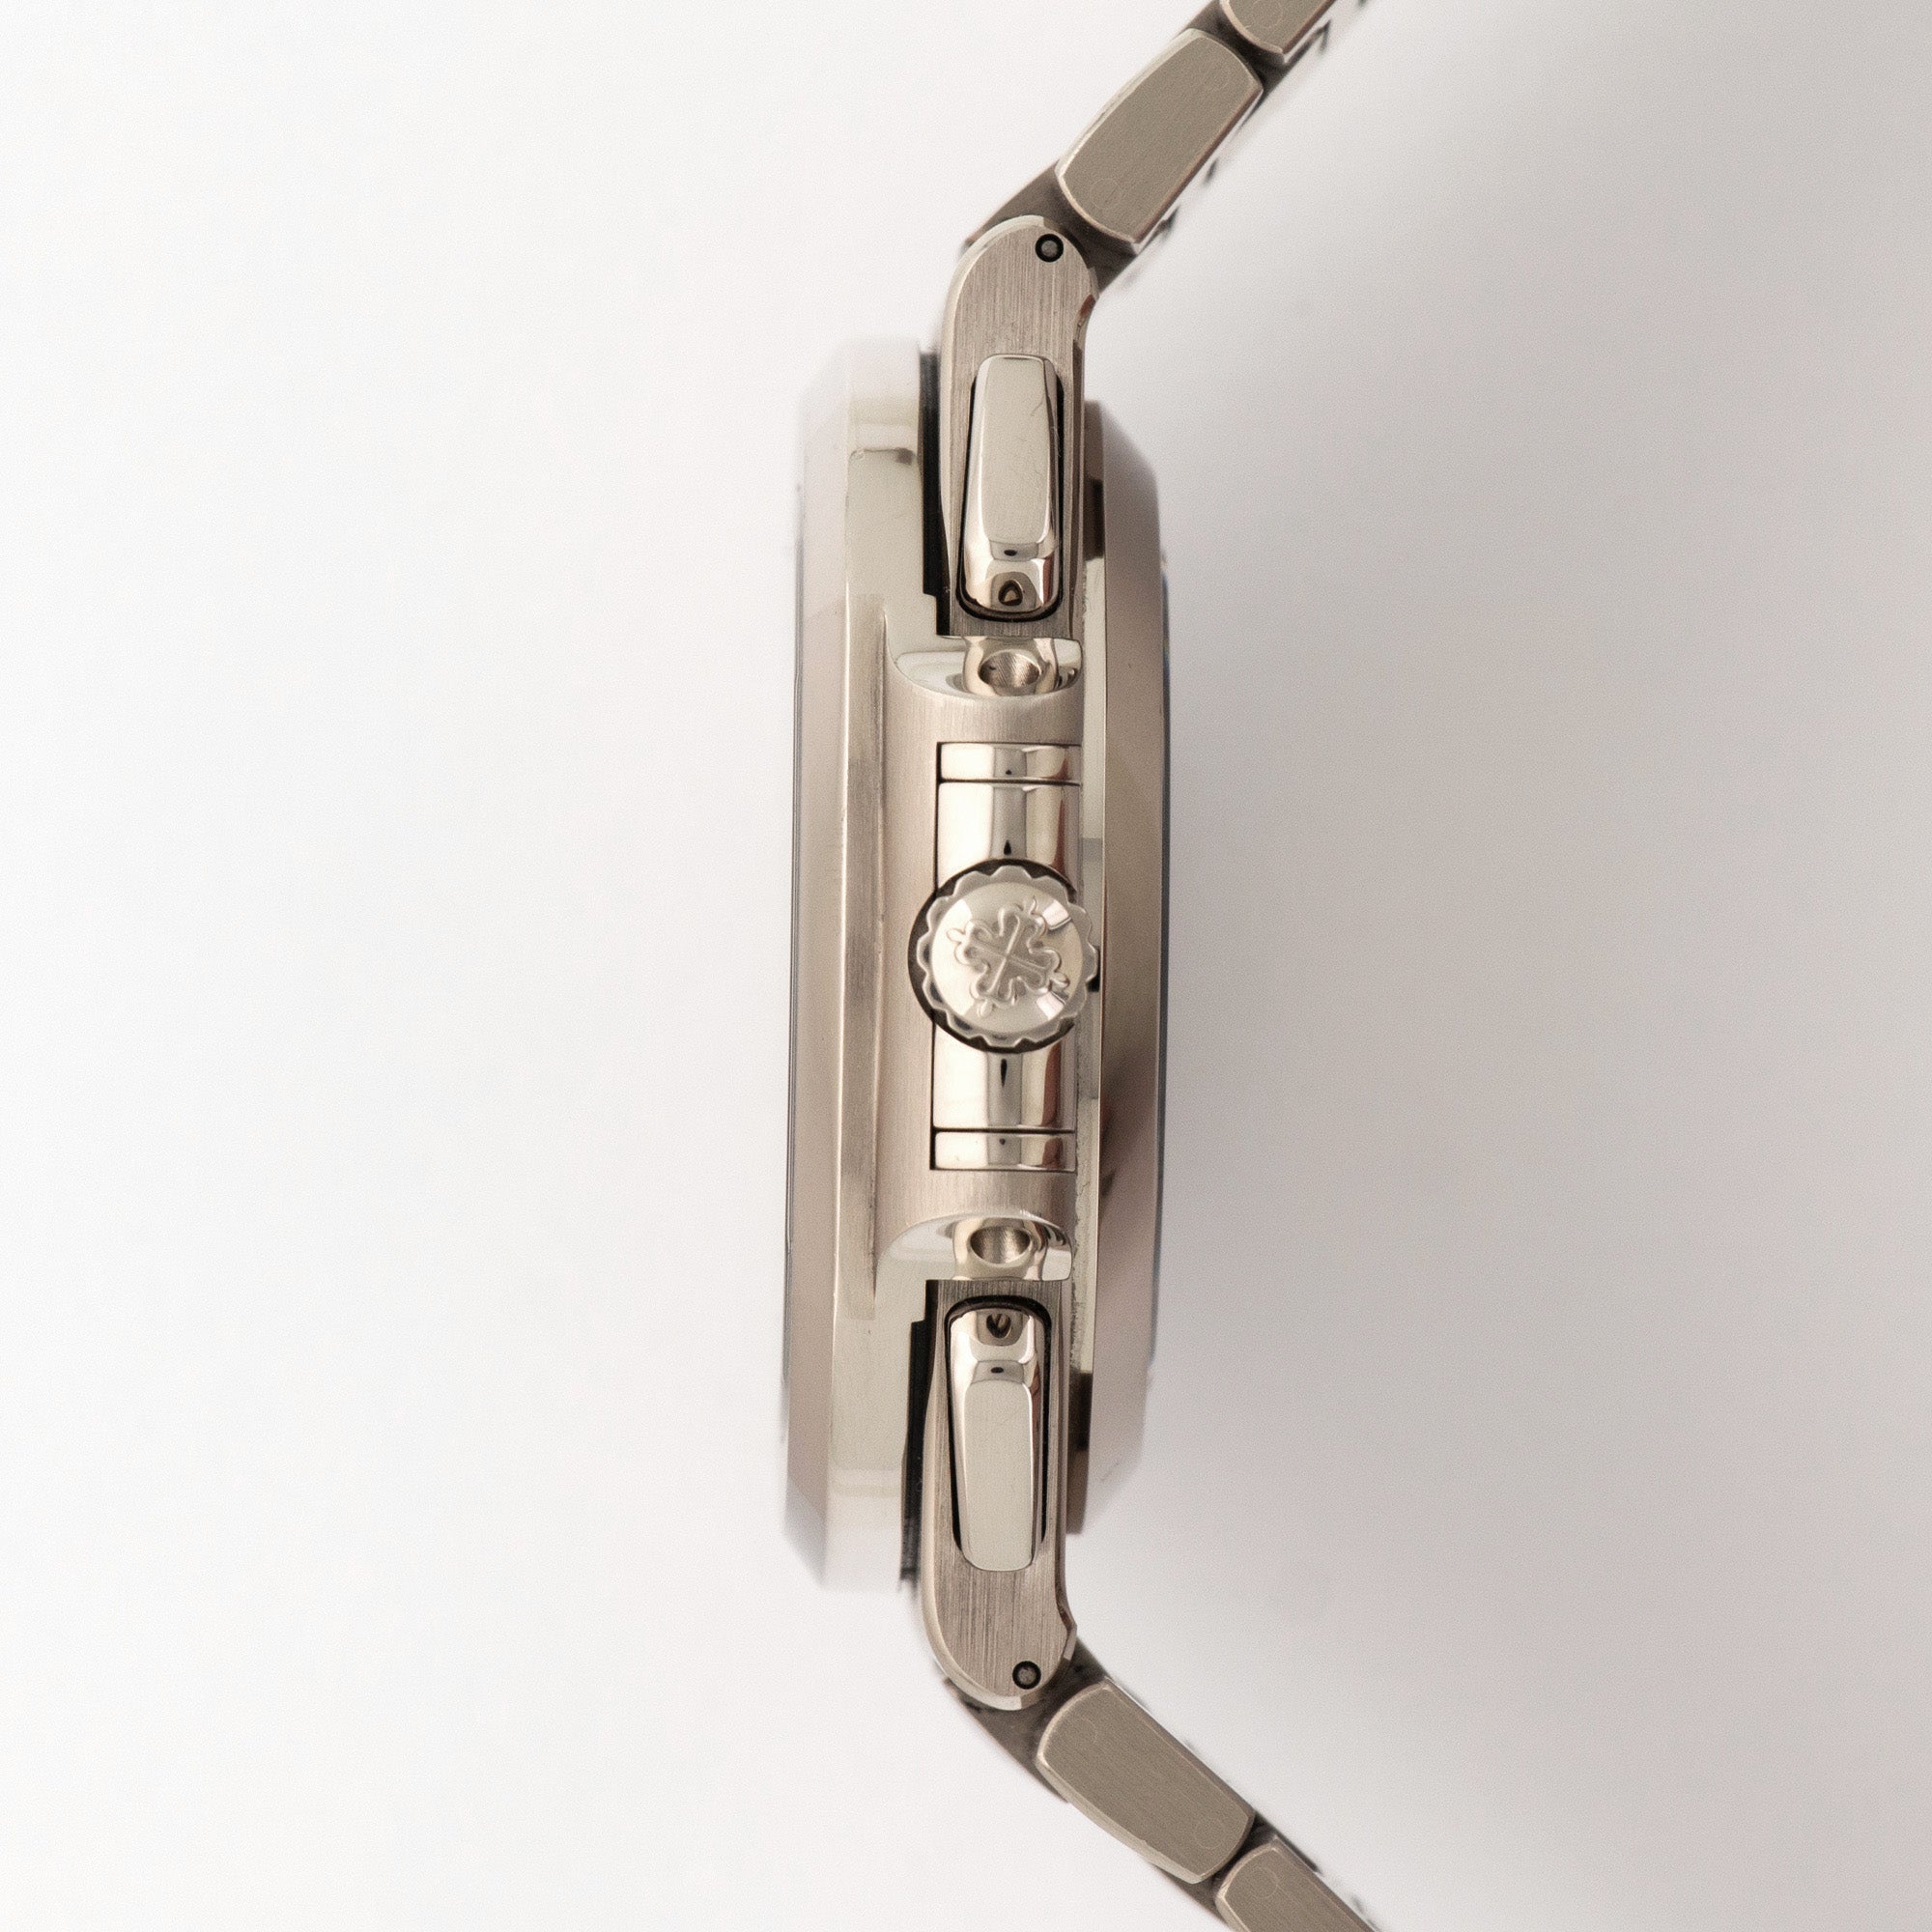 Patek Philippe - Patek Philippe White Gold Nautilus Chronograph Watch Ref. 5976 - The Keystone Watches